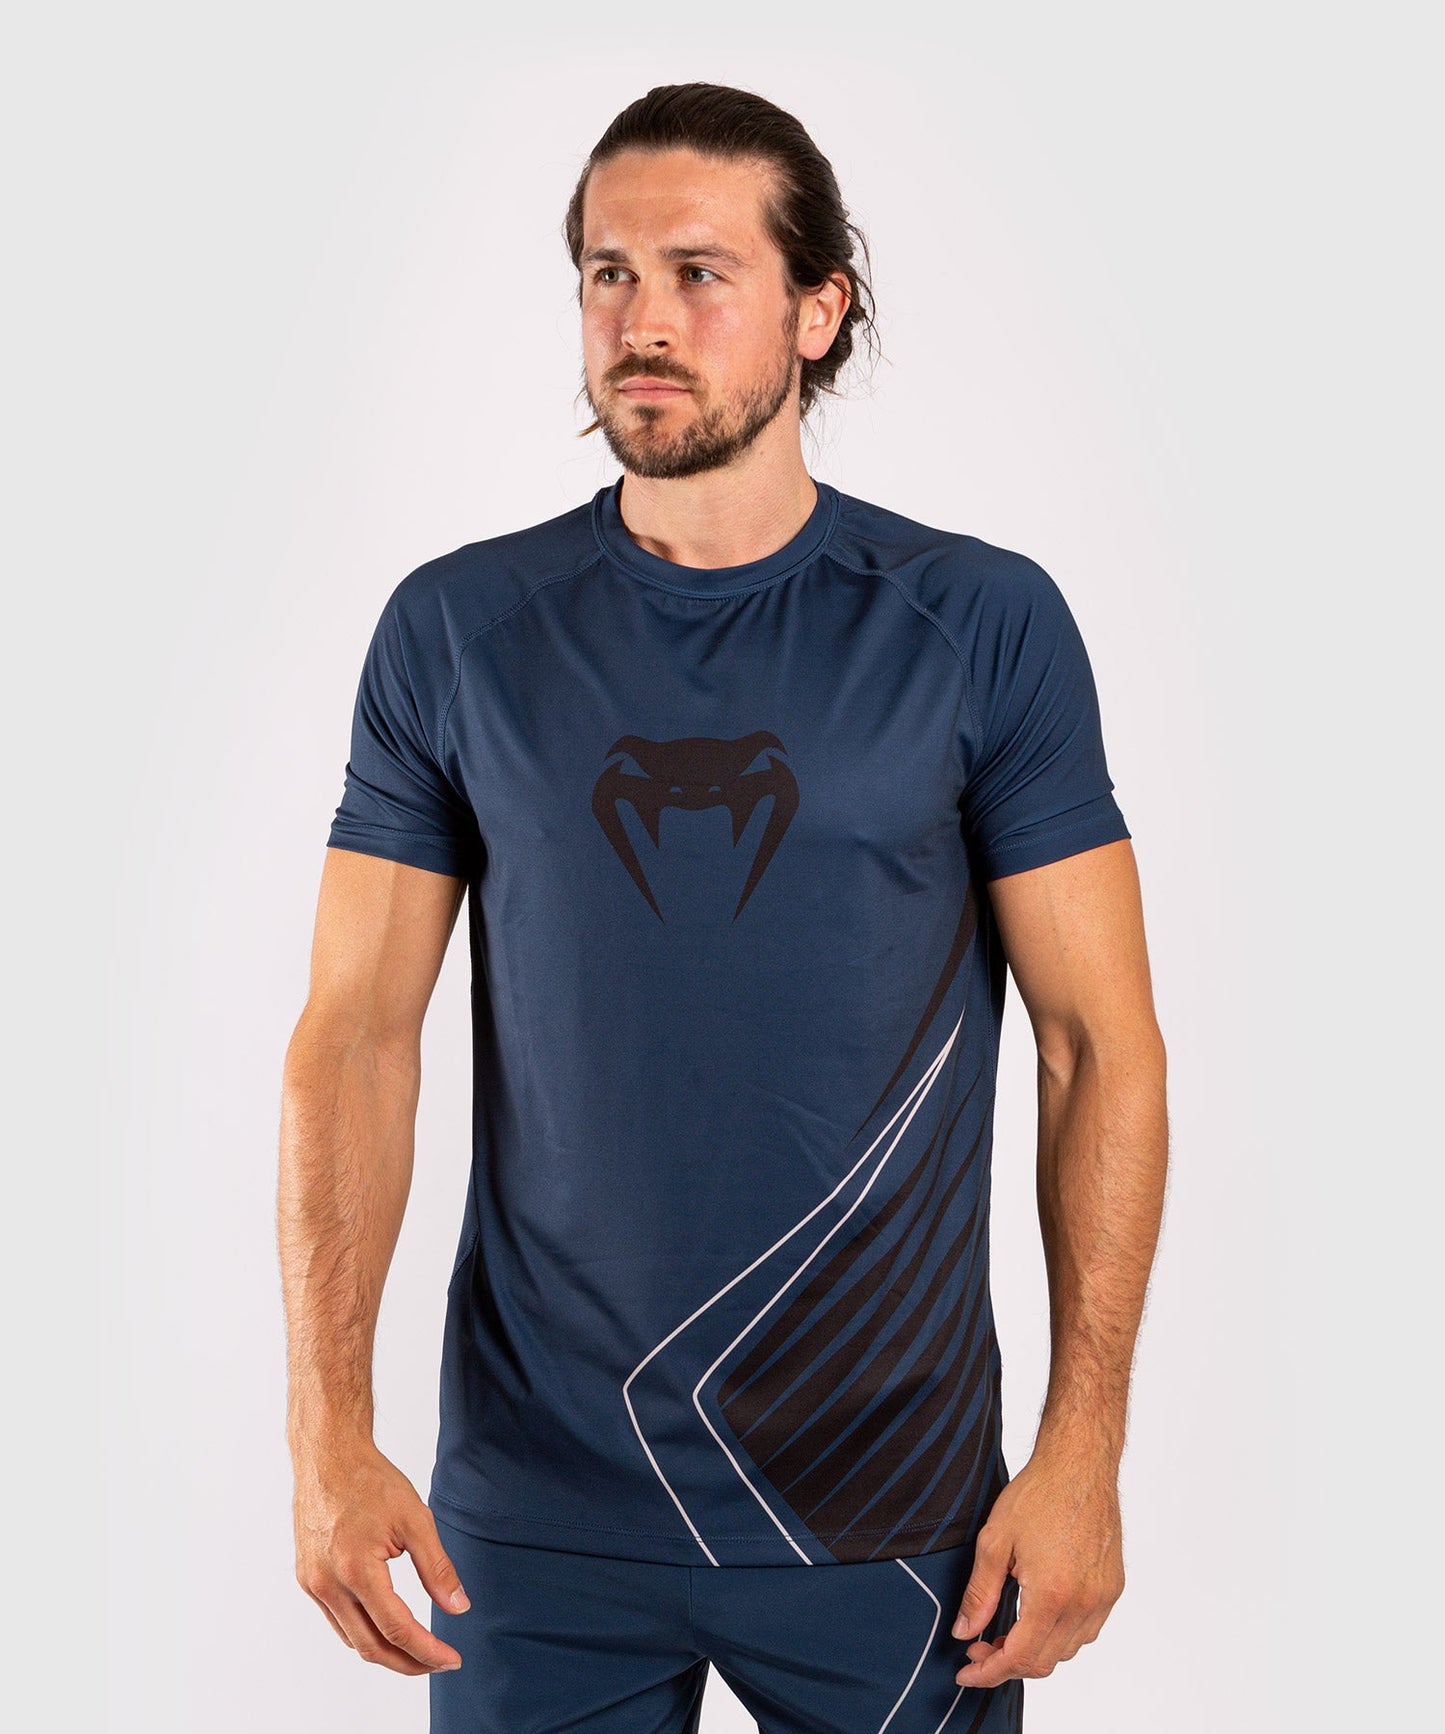 Venum Contender 5.0 Dry-Tech T-shirt - Navy/Sand